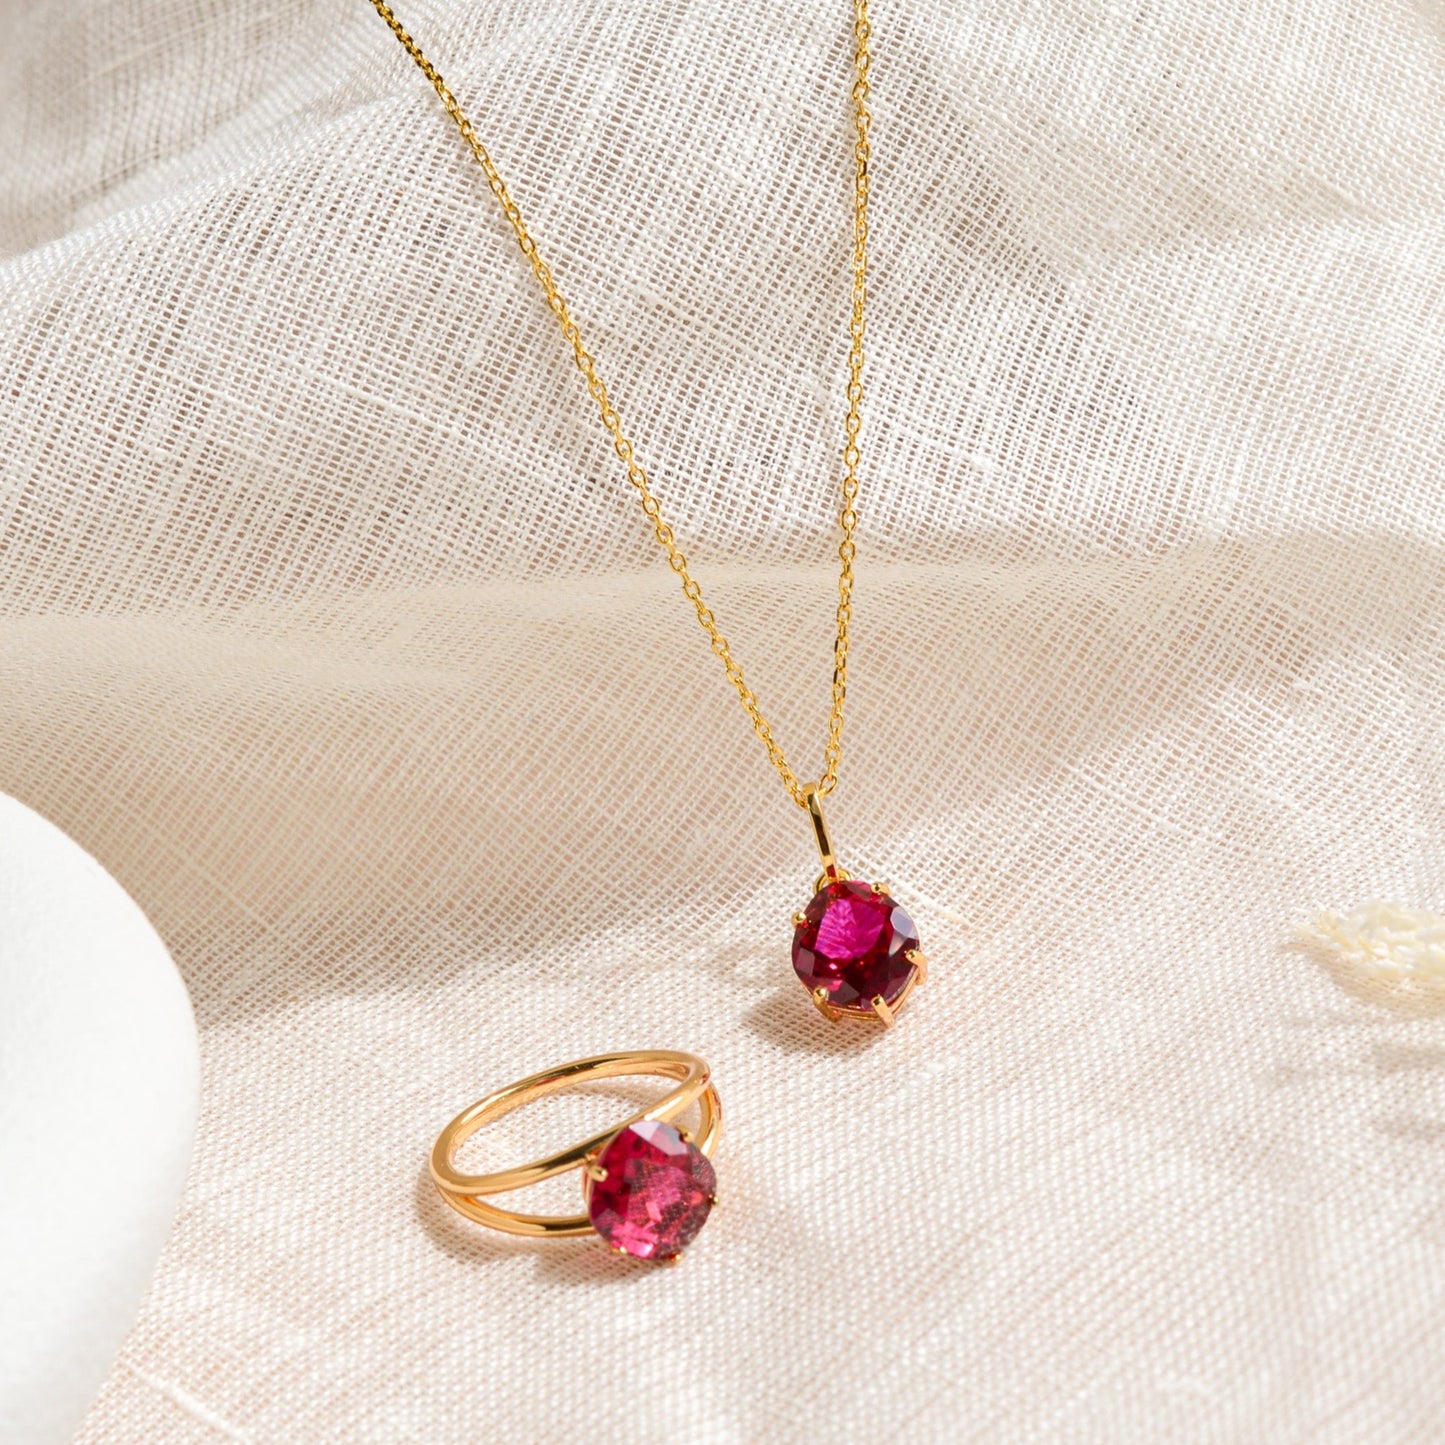 Ruby Necklace / Earrings Gold Vermeil